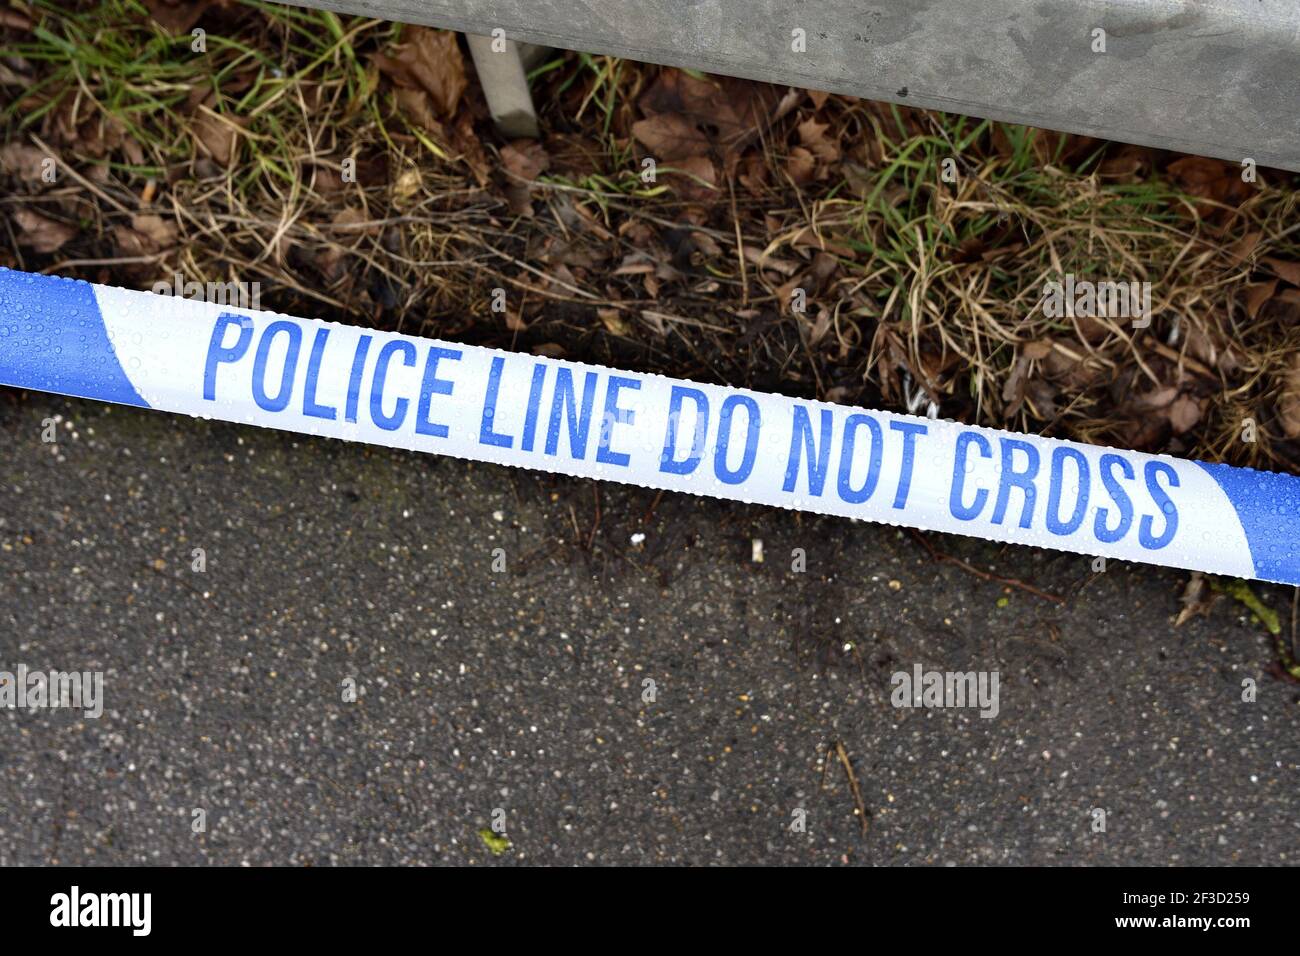 'Police Line Do Not Cross' tape at a crime scene (Maidstone, Kent, UK) Stock Photo